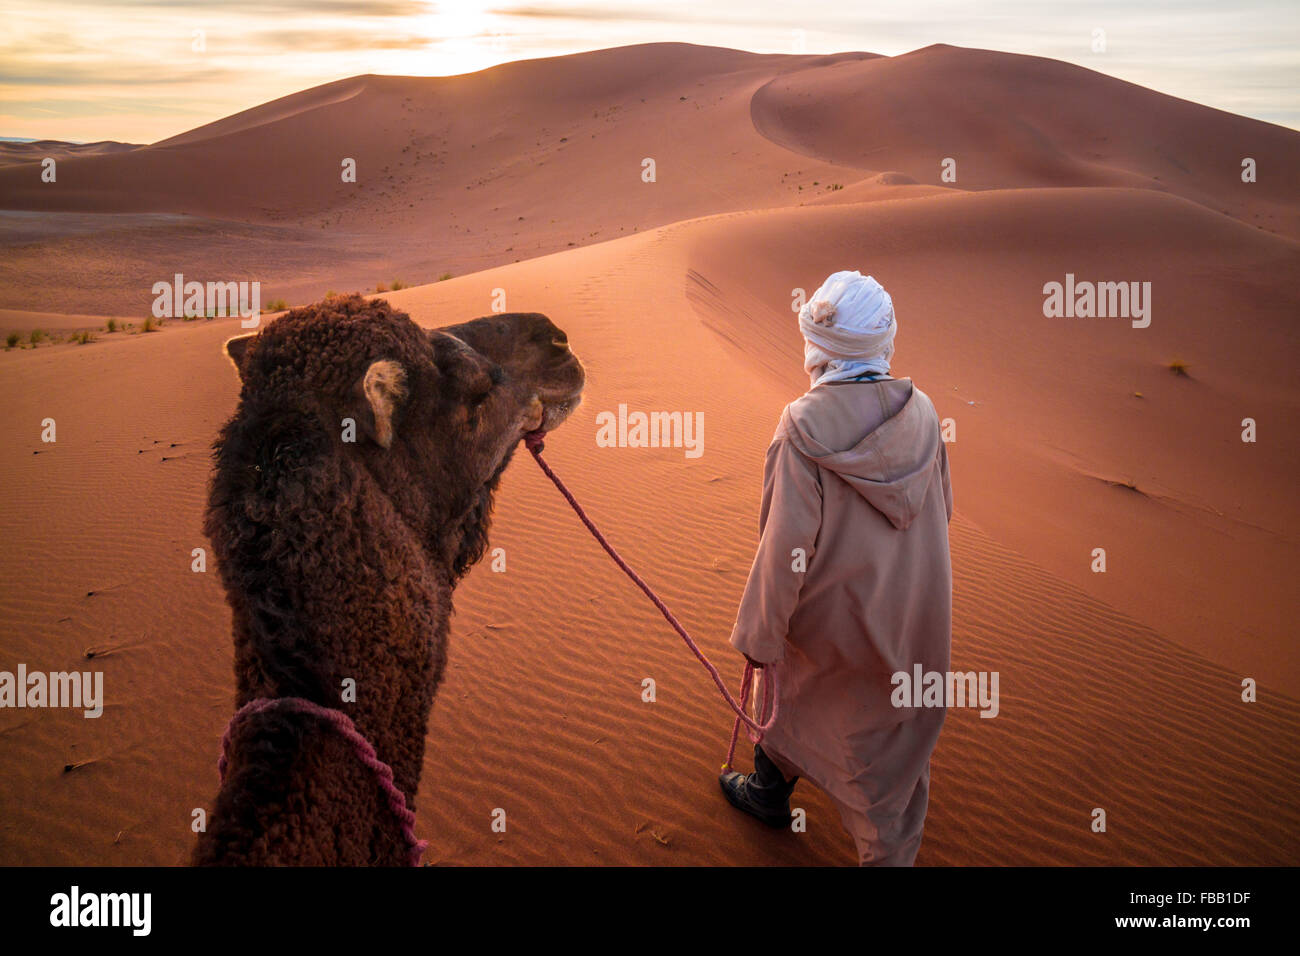 Man leading camel, Erg Chegaga Morocco Stock Photo